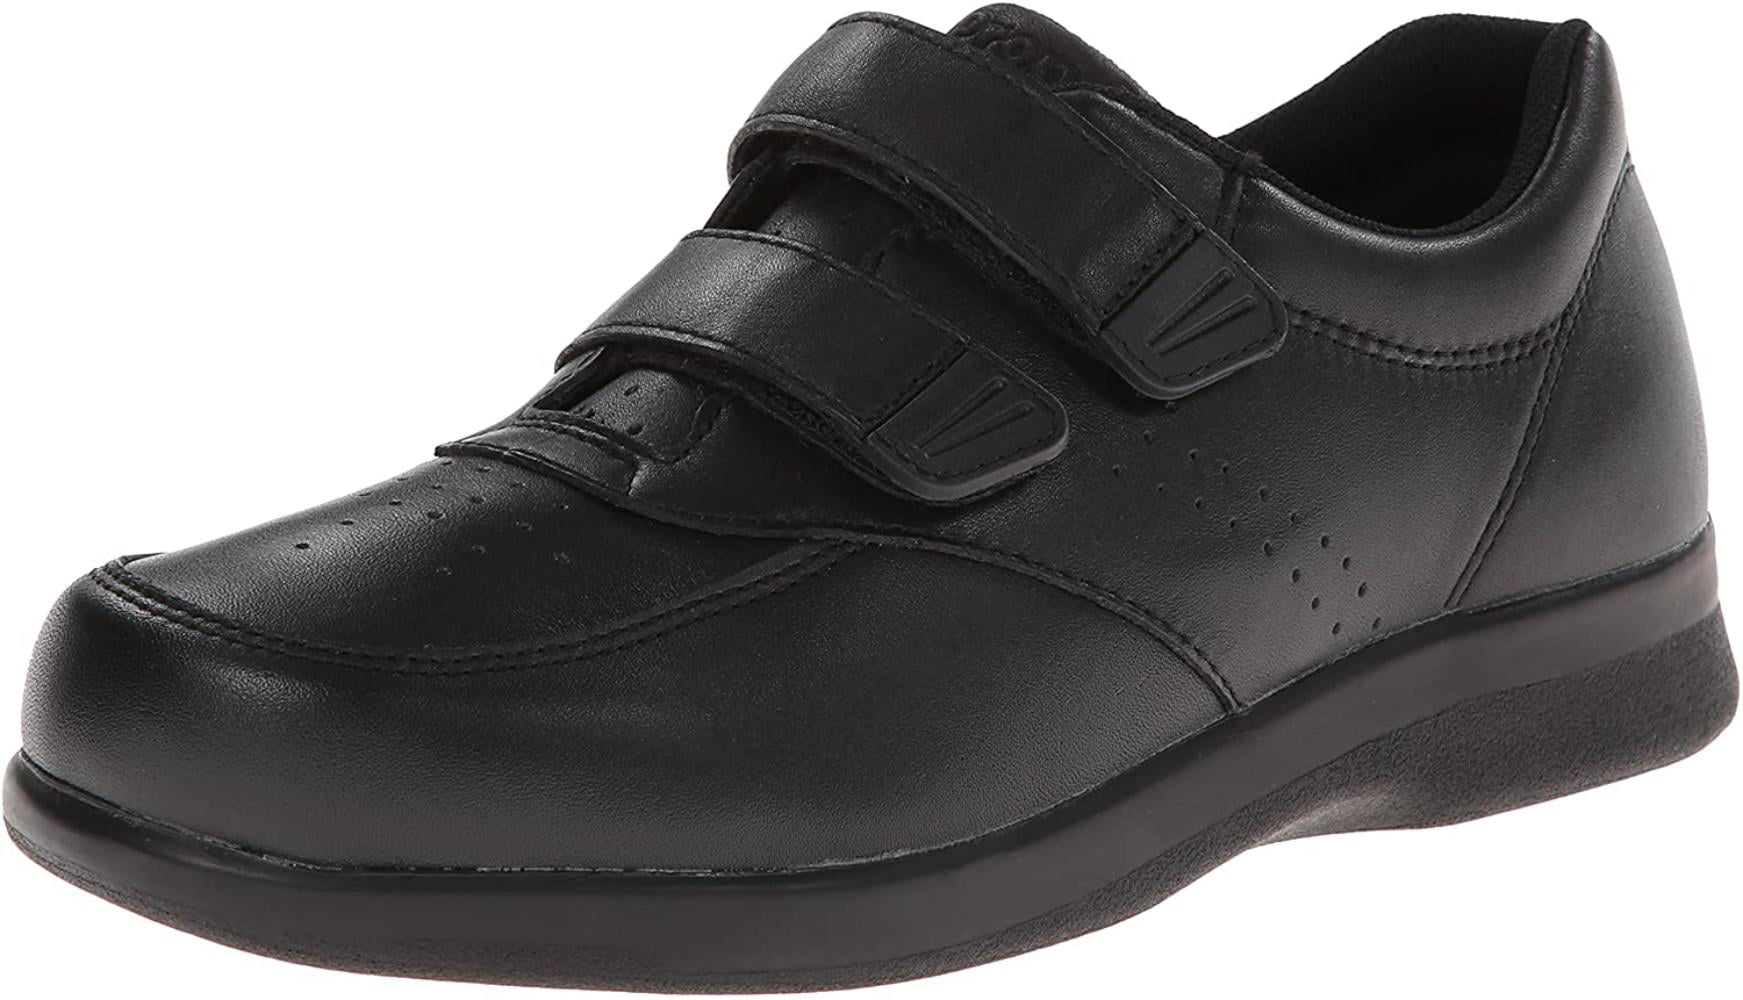 Propet Men's Vista Strap Shoe,Black,12 